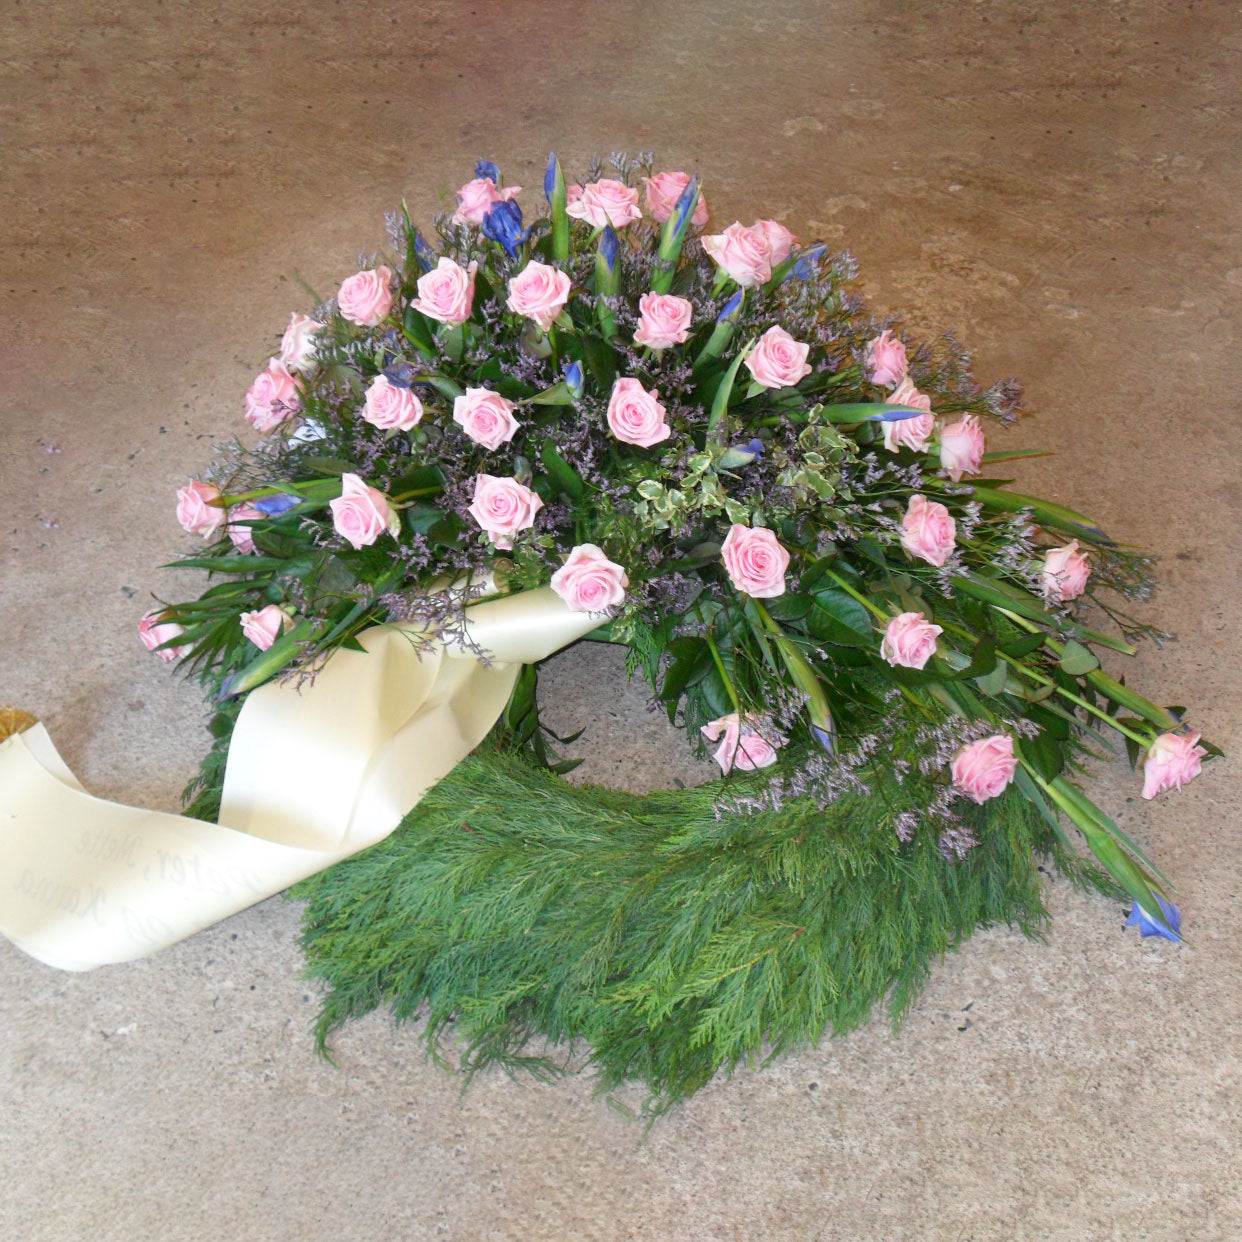 Begravelsesbinderi. Thujakrans med lyserøde roser og blå iris samt et bånd